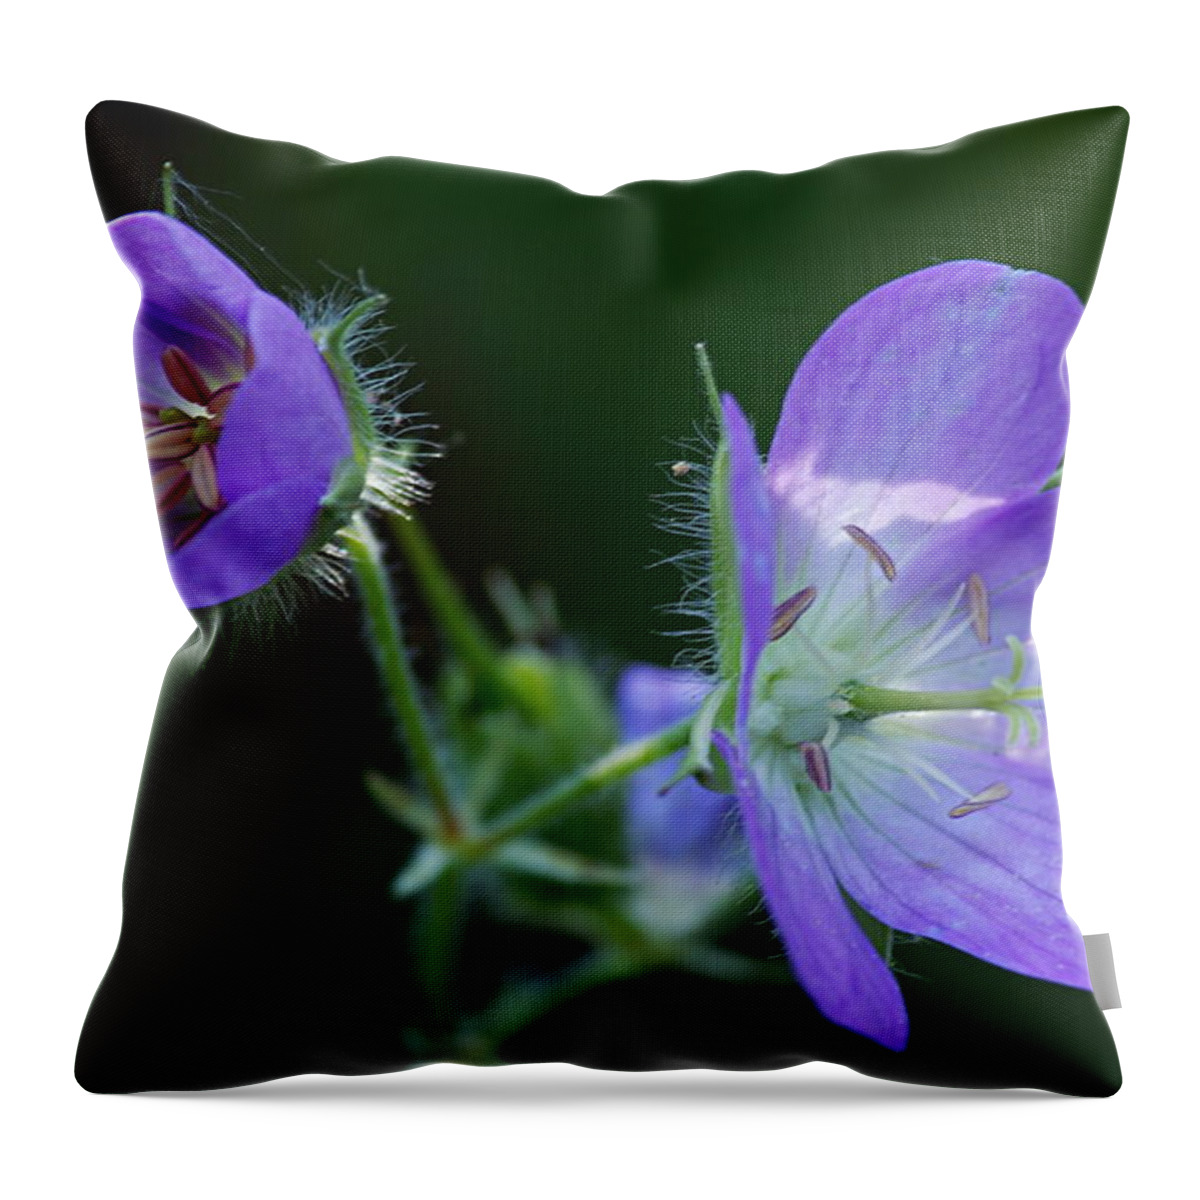 Geranium Throw Pillow featuring the photograph Wild Geraniums by Larry Ricker